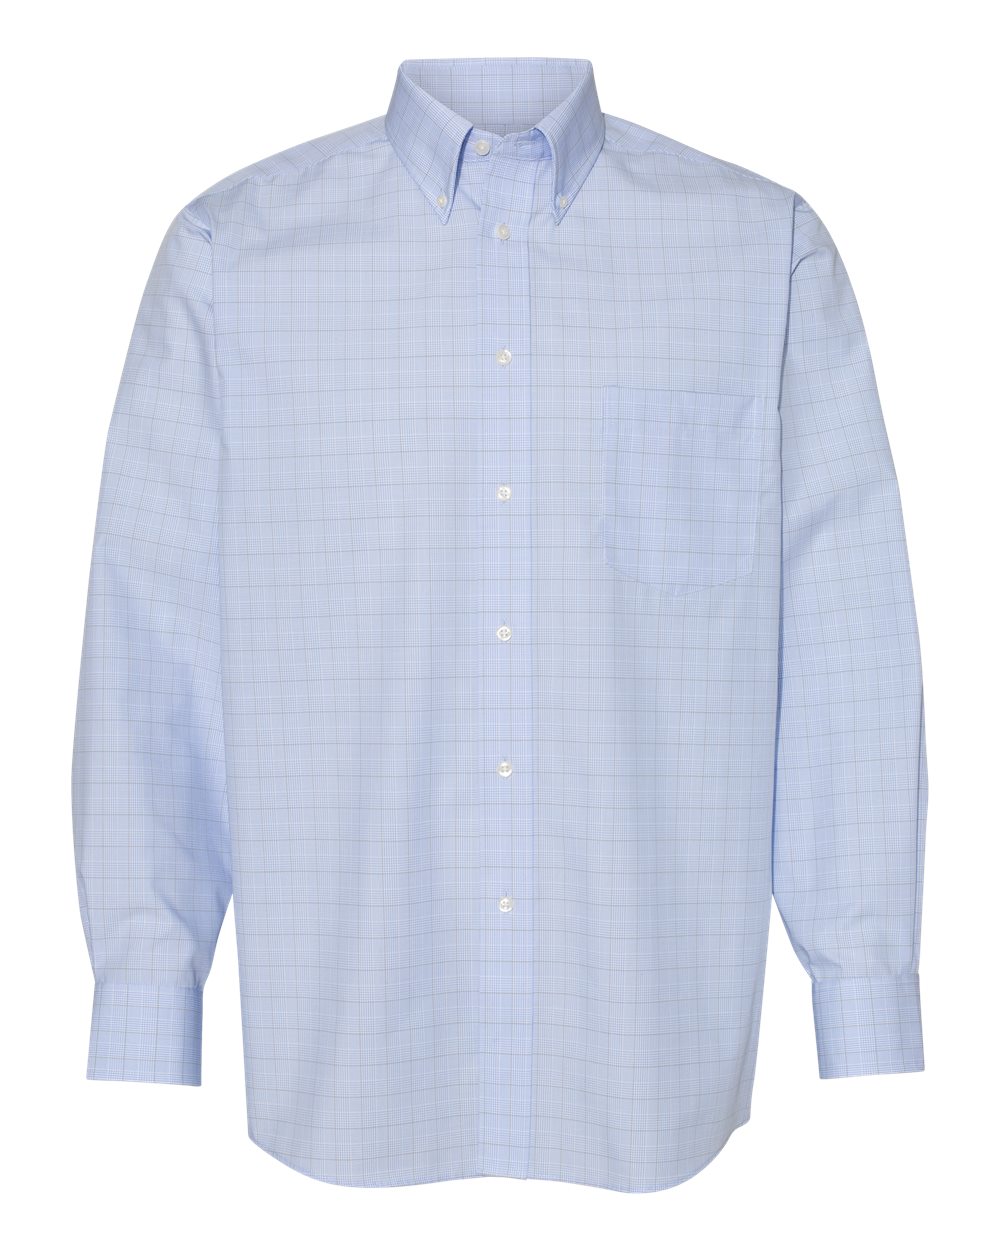 Van Heusen 13V0467 - Blue Suitings Non-Iron Patterned Shirt